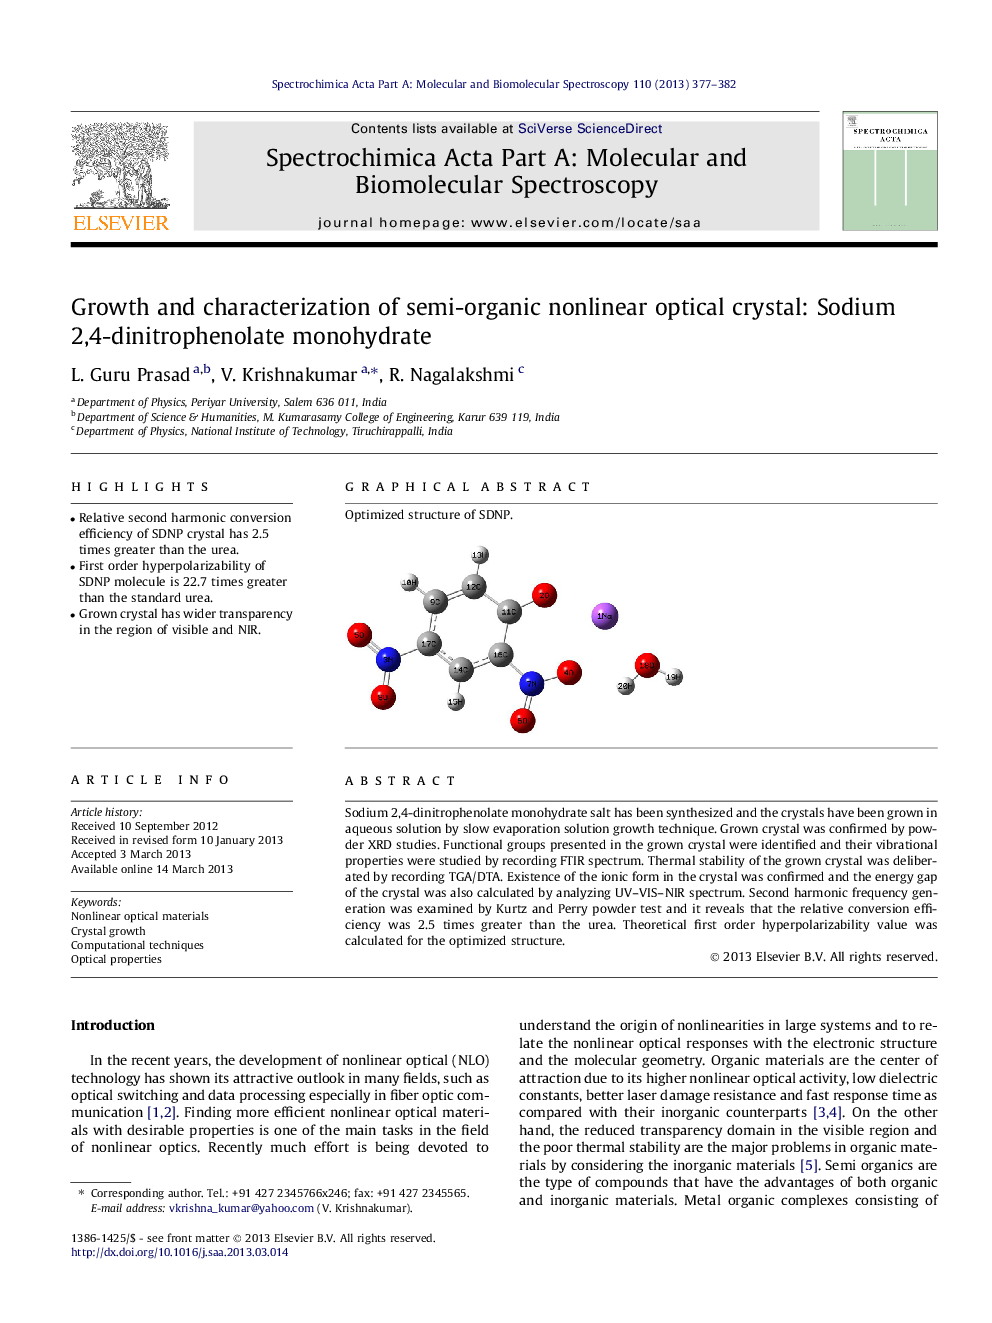 Growth and characterization of semi-organic nonlinear optical crystal: Sodium 2,4-dinitrophenolate monohydrate